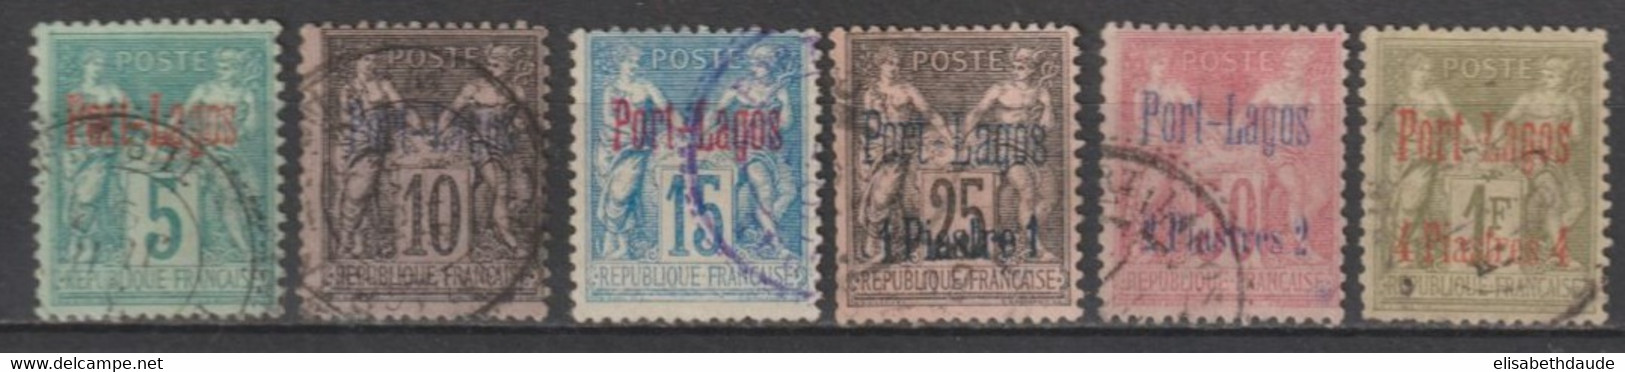 PORT LAGOS - 1893 - SERIE COMPLETE YVERT N° 1/6 OBLITERES - COTE = 500 EUR. - Gebraucht